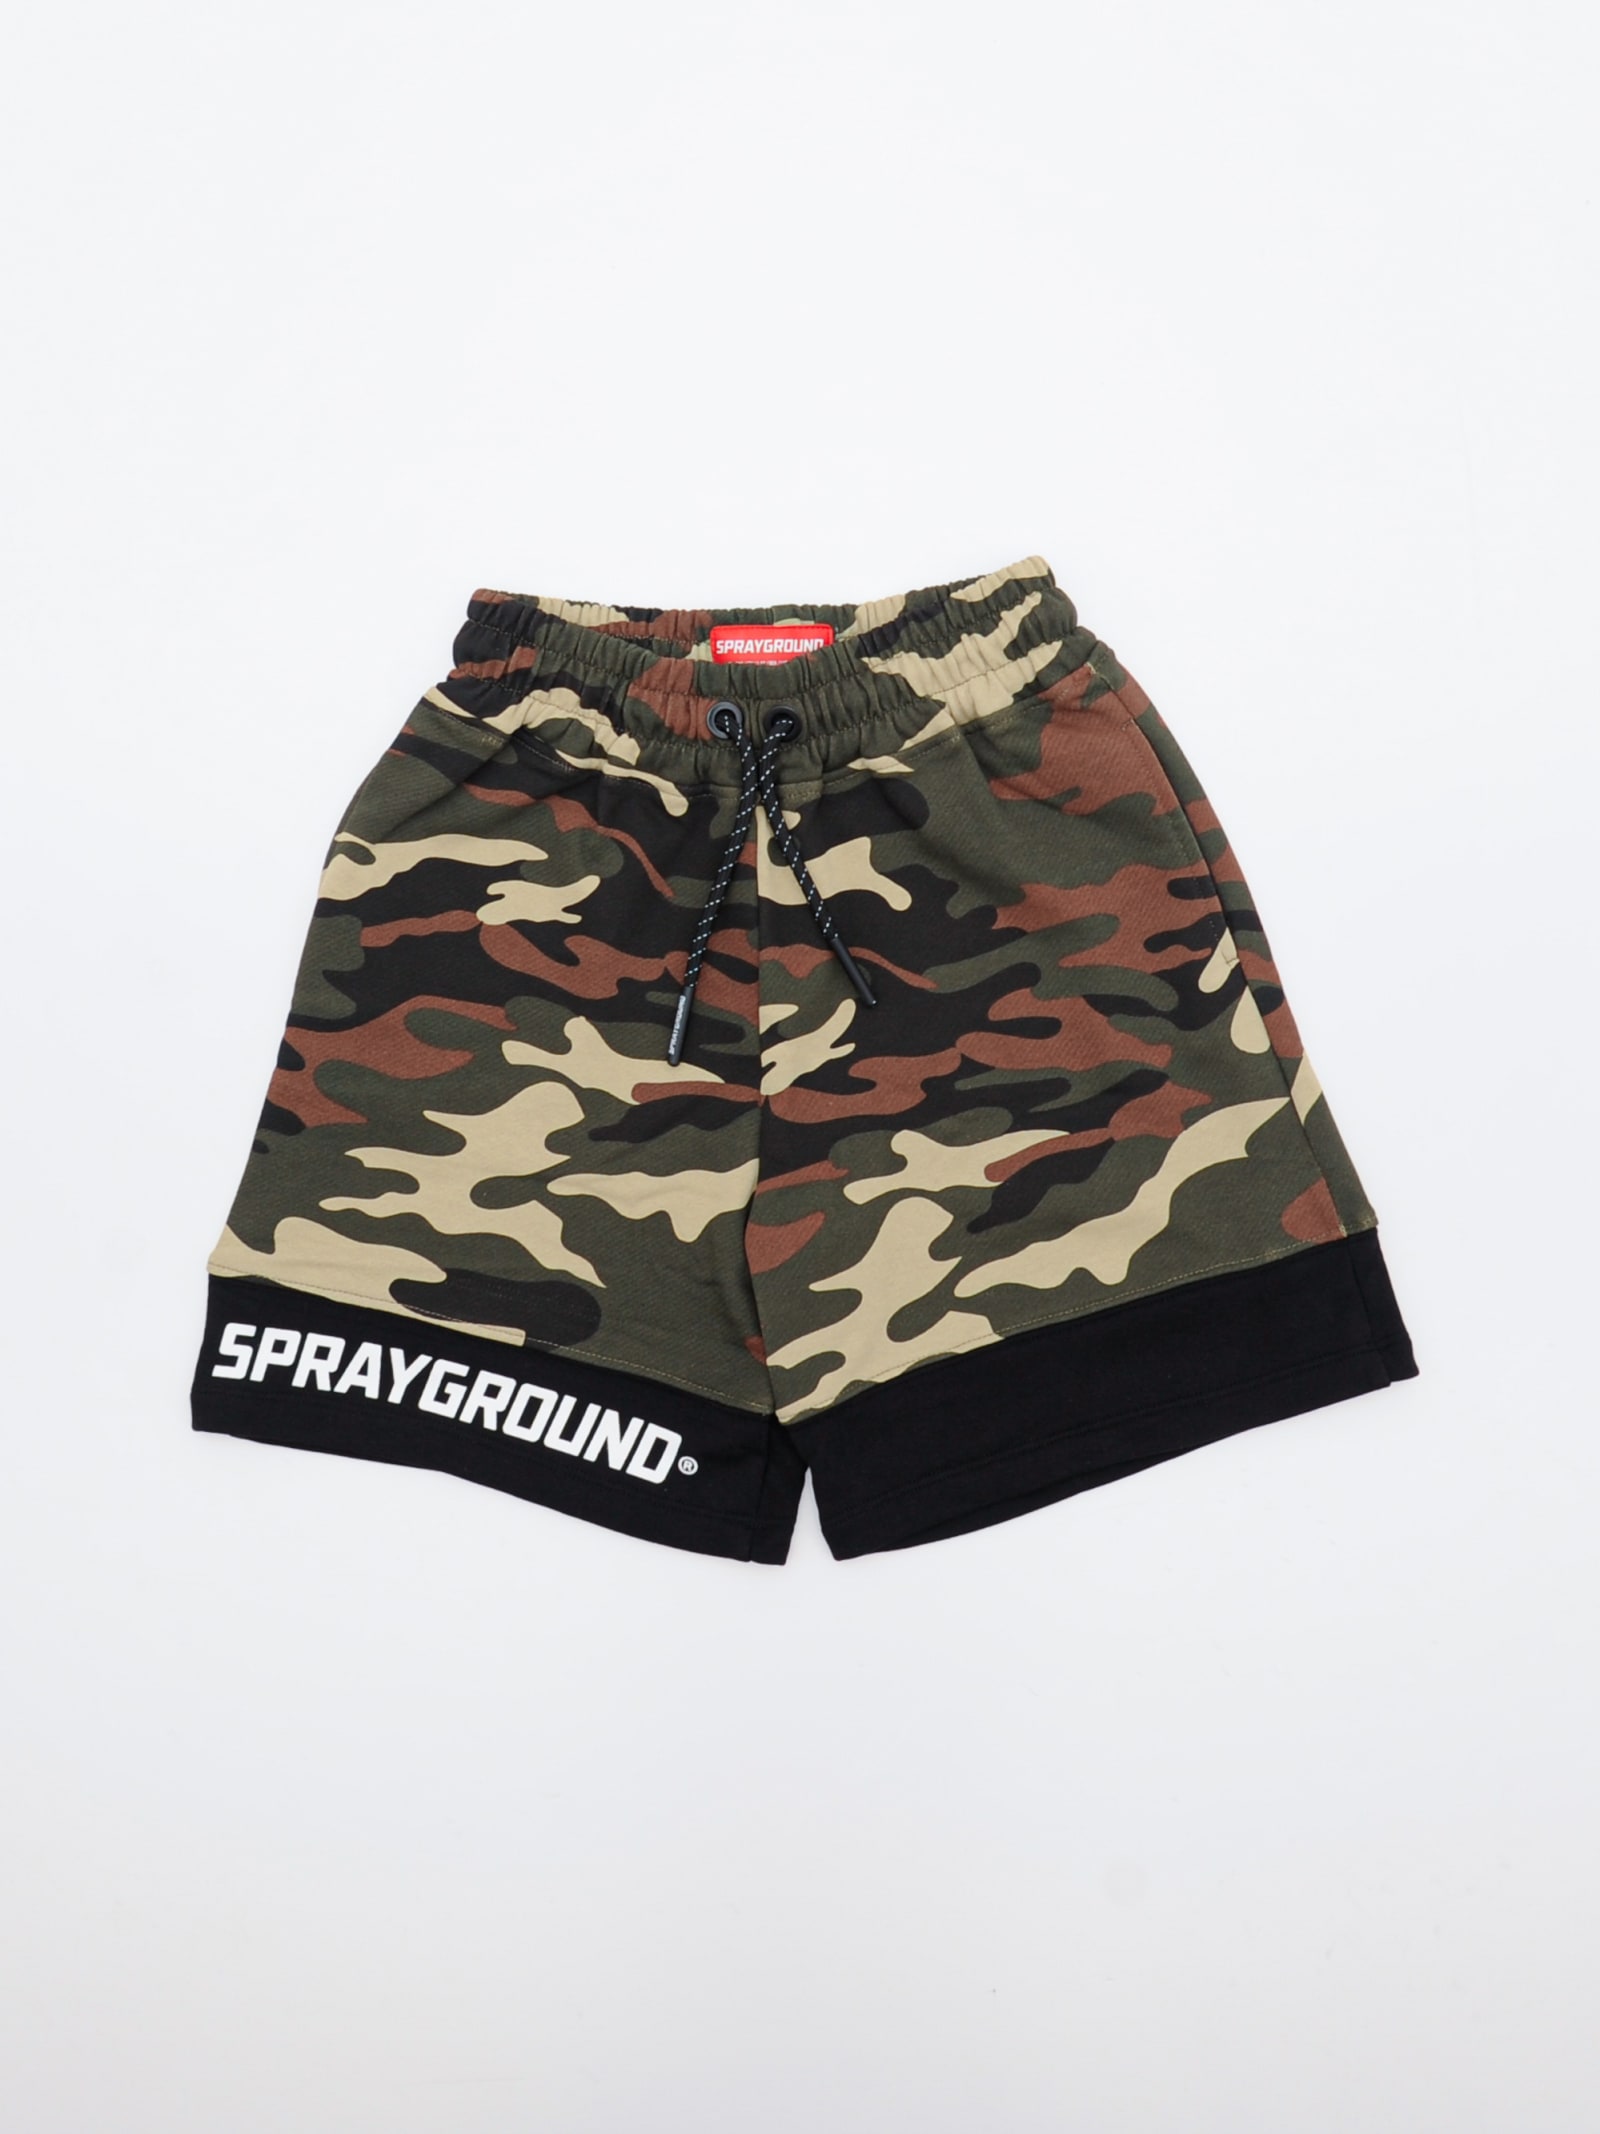 Sprayground Sweatpants Shorts